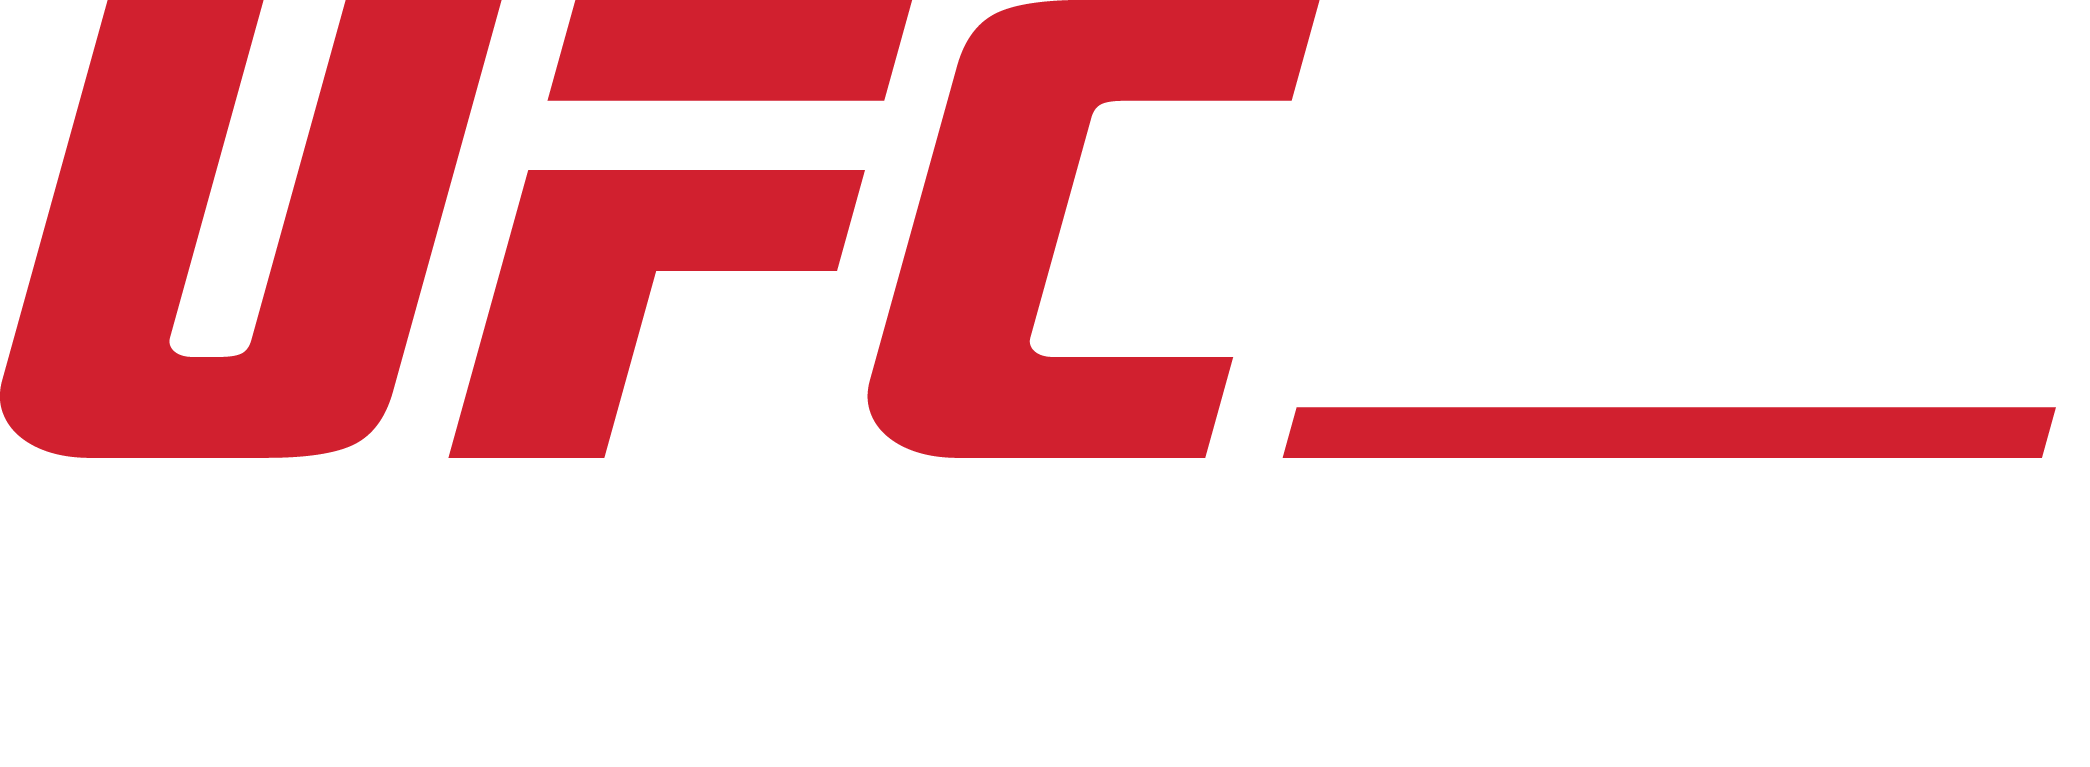 Ufc logo footer